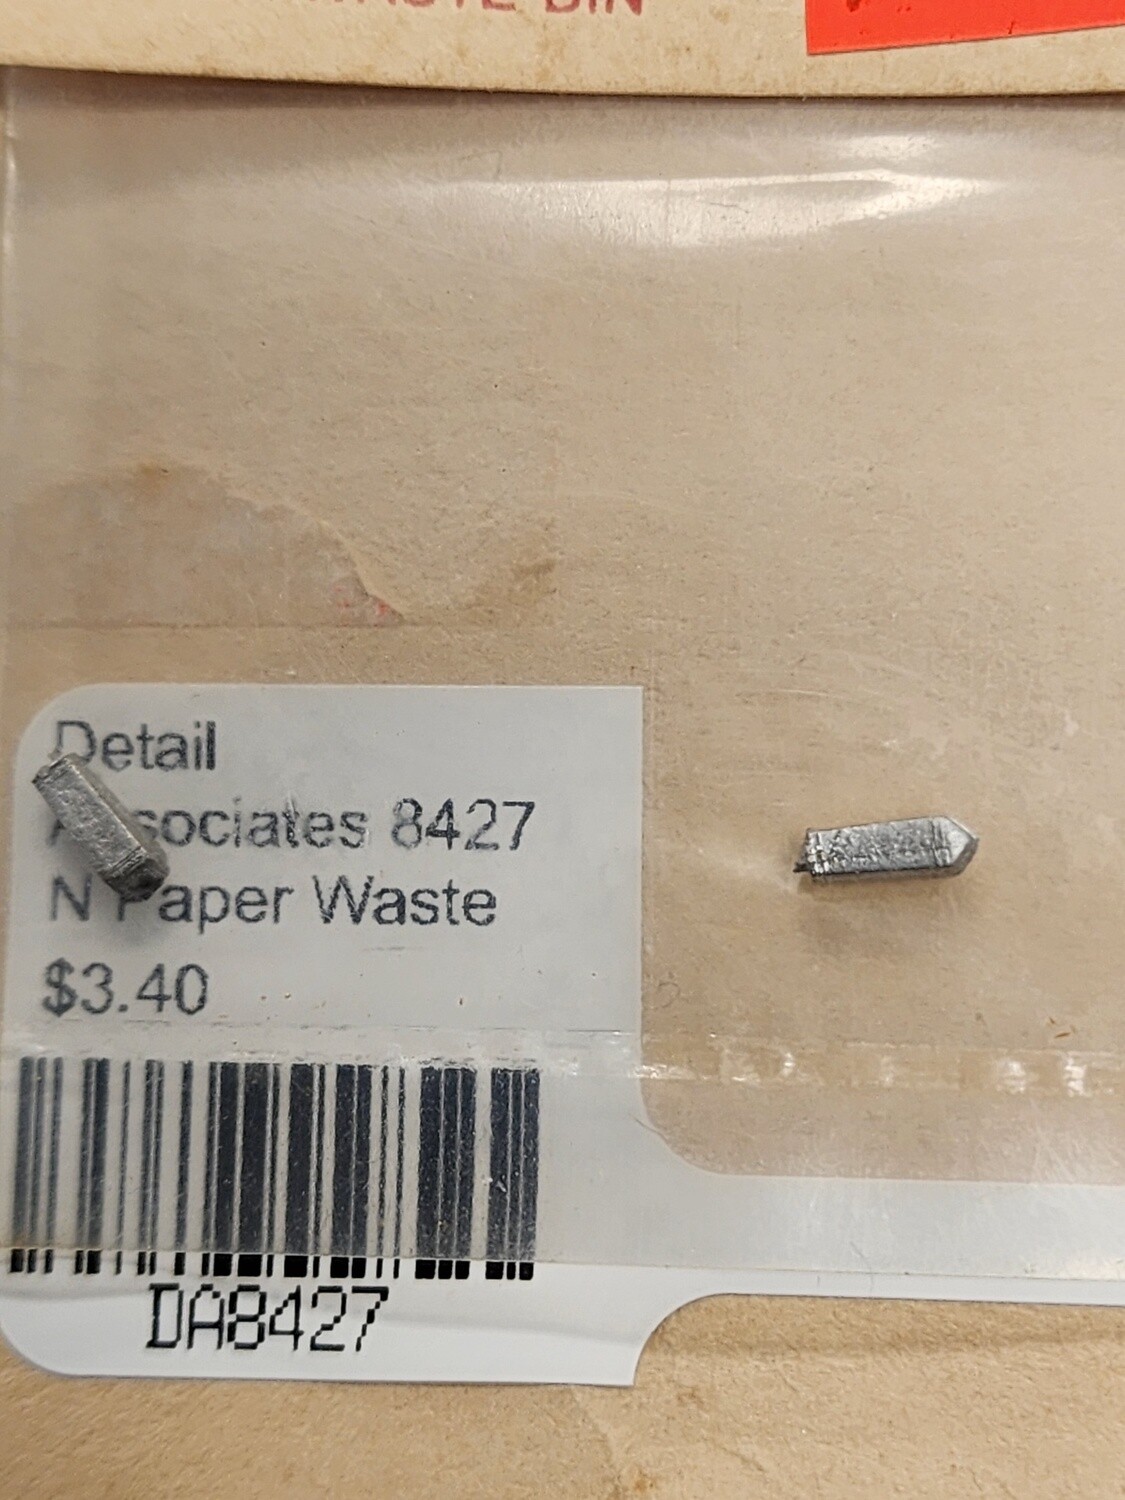 Detail Associates 8427 N Paper Waste Bin